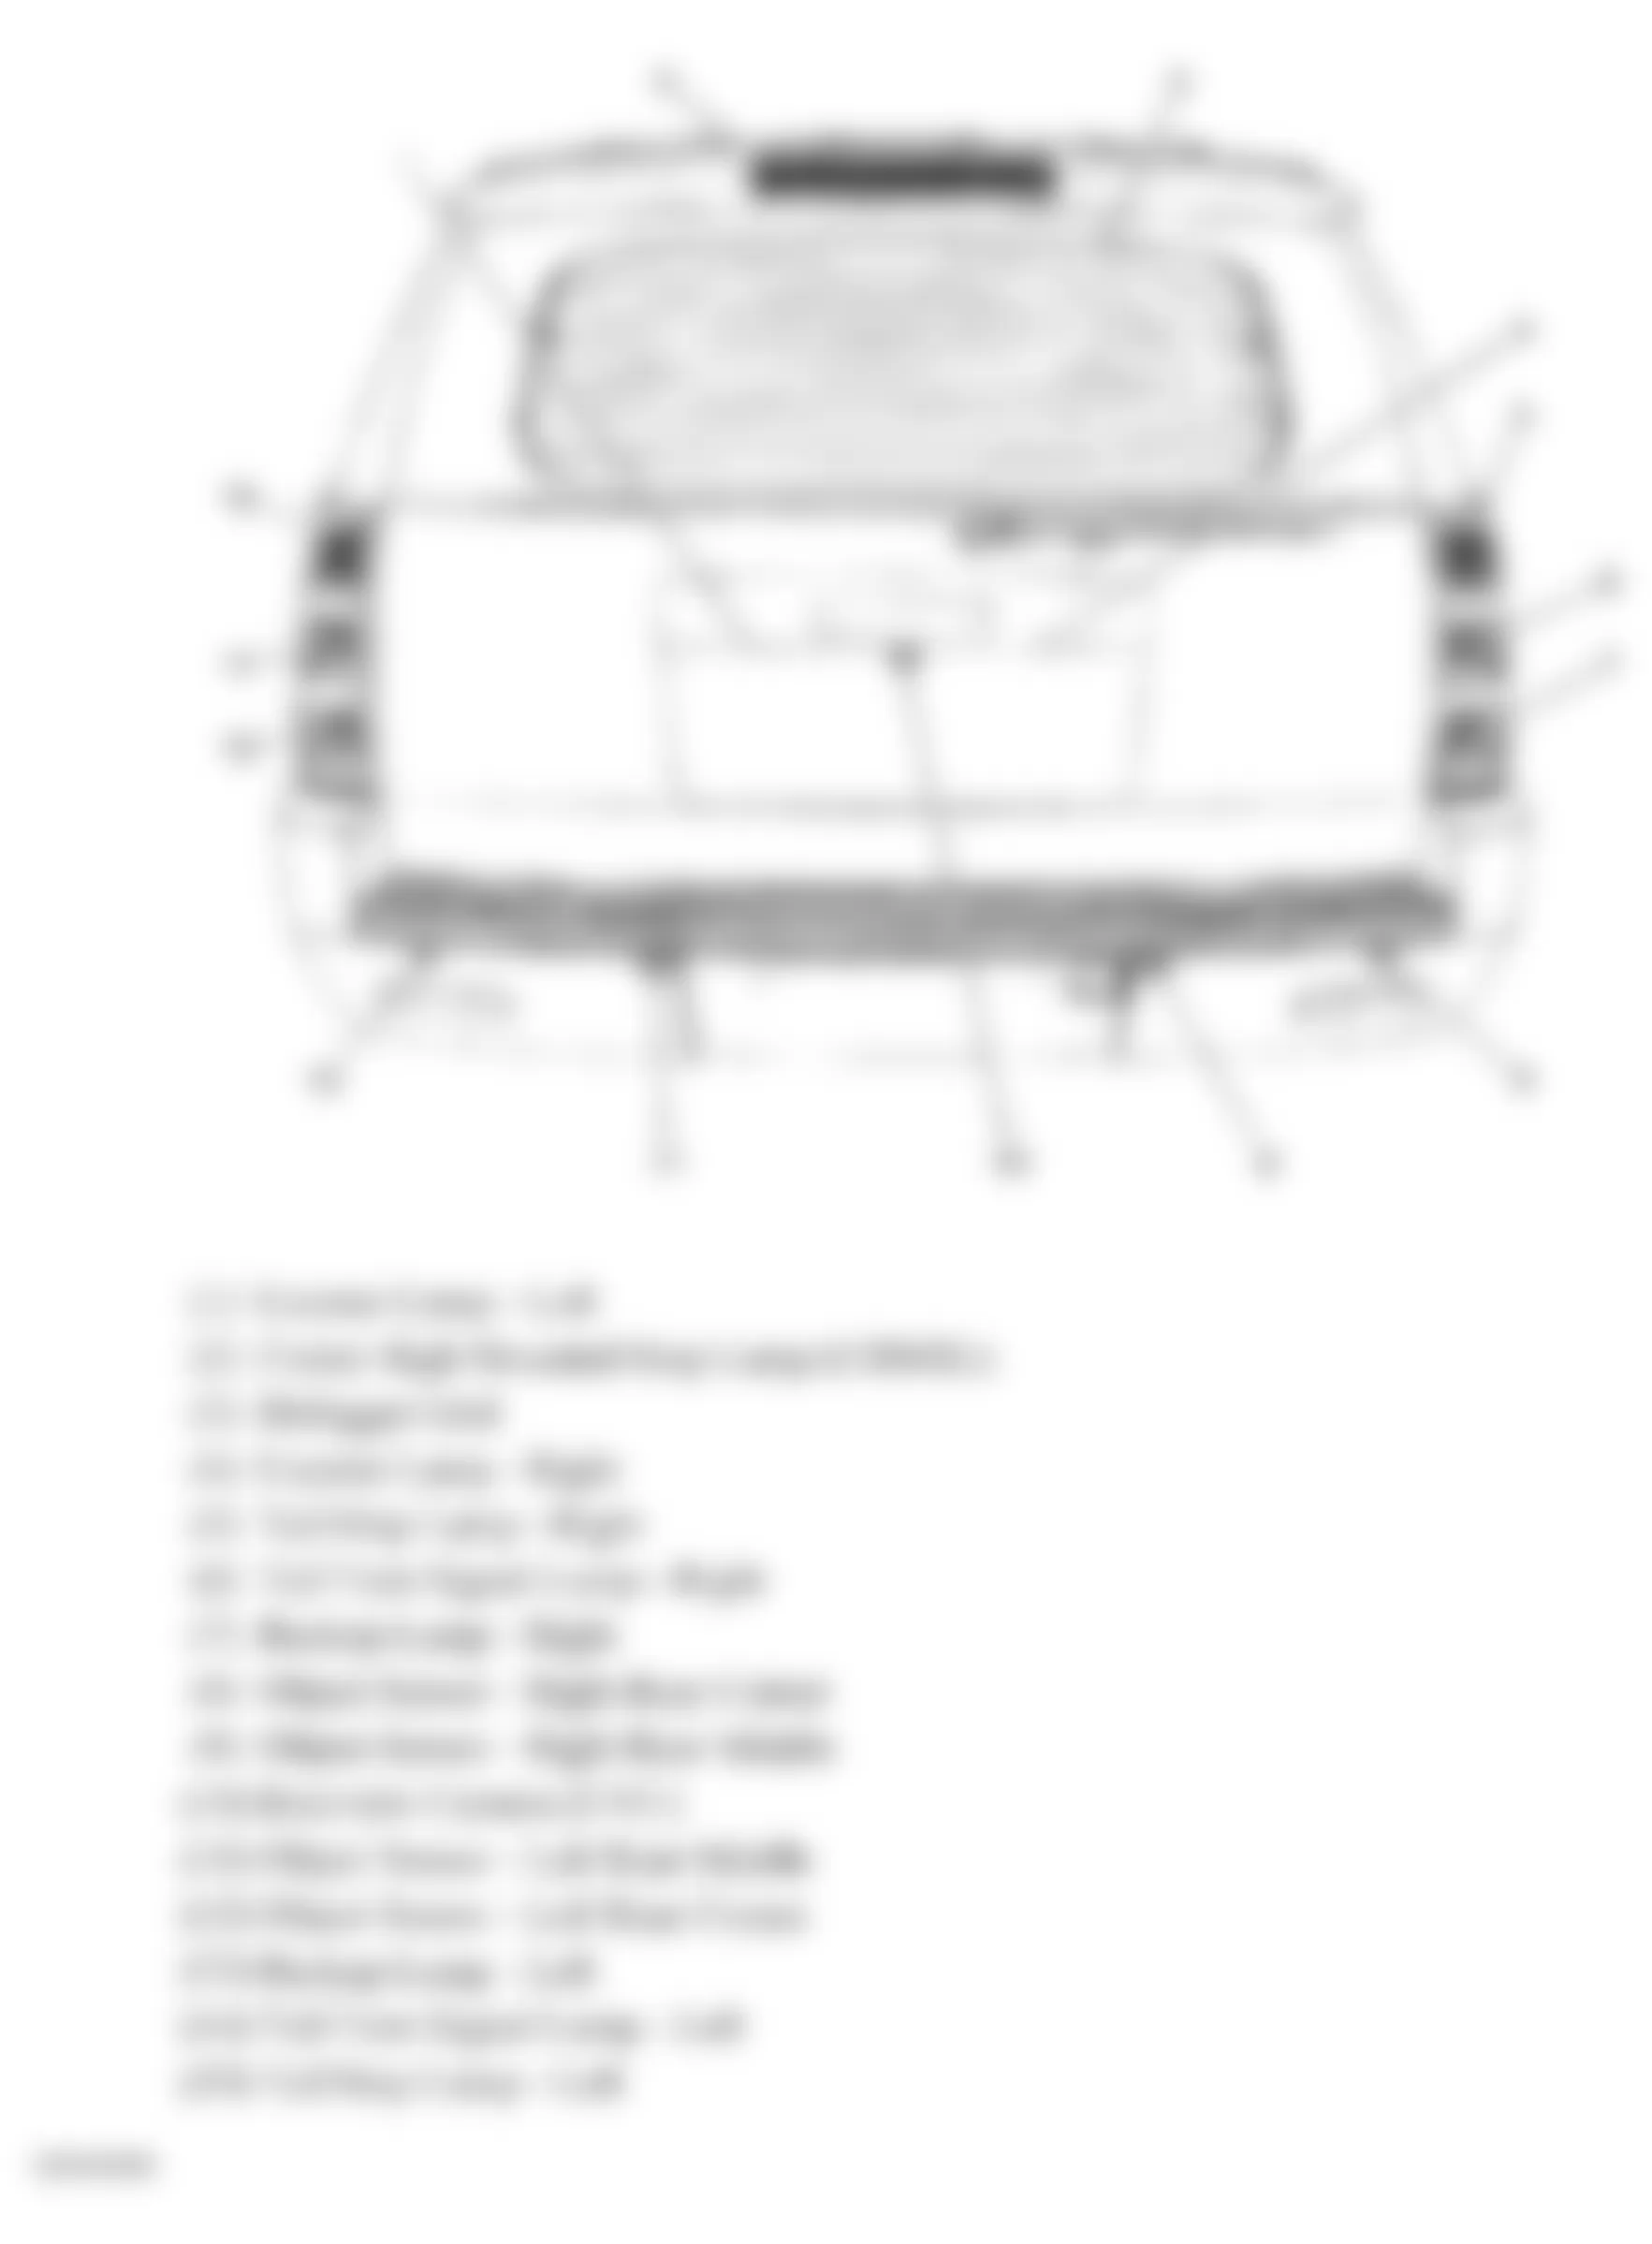 GMC Yukon 2007 - Component Locations -  Rear Of Vehicle (Yukon W/One Piece Liftgate)